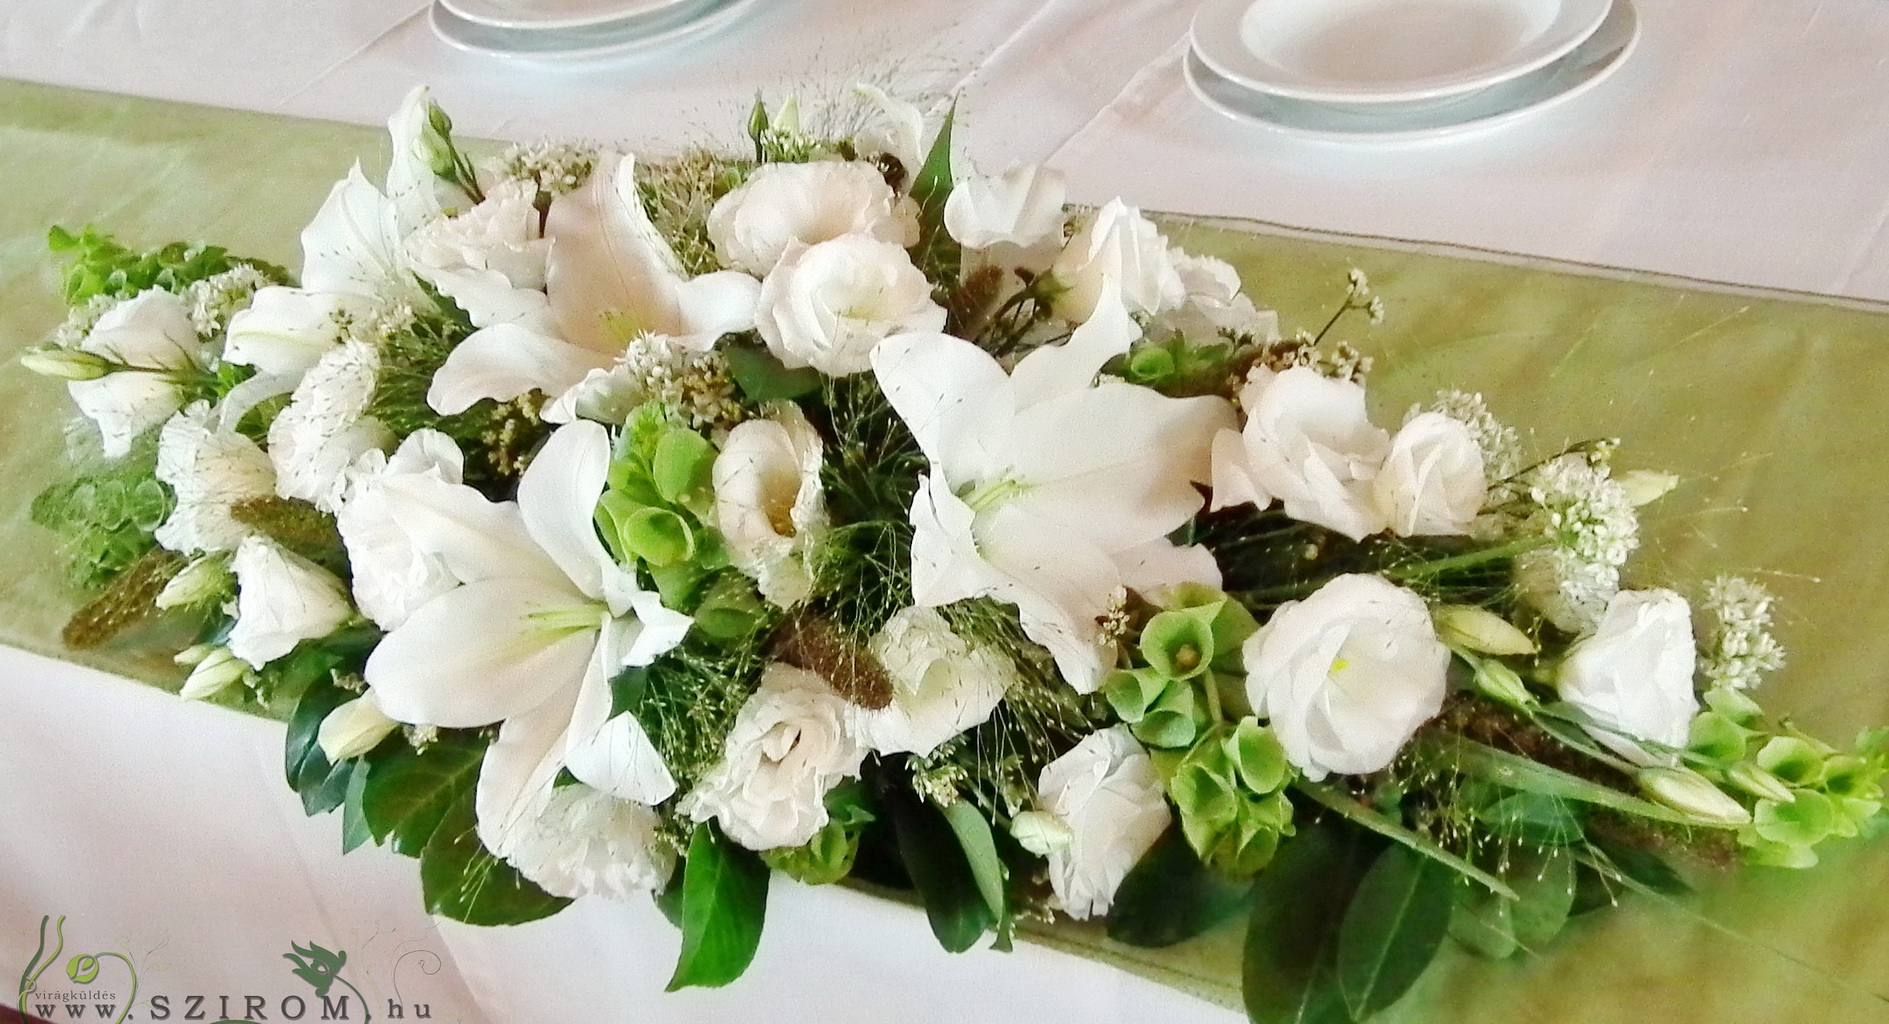 flower delivery Budapest - Main table centerpiece (lilies, lisianthus, allium, white), Kőhegy Fogadó, wedding